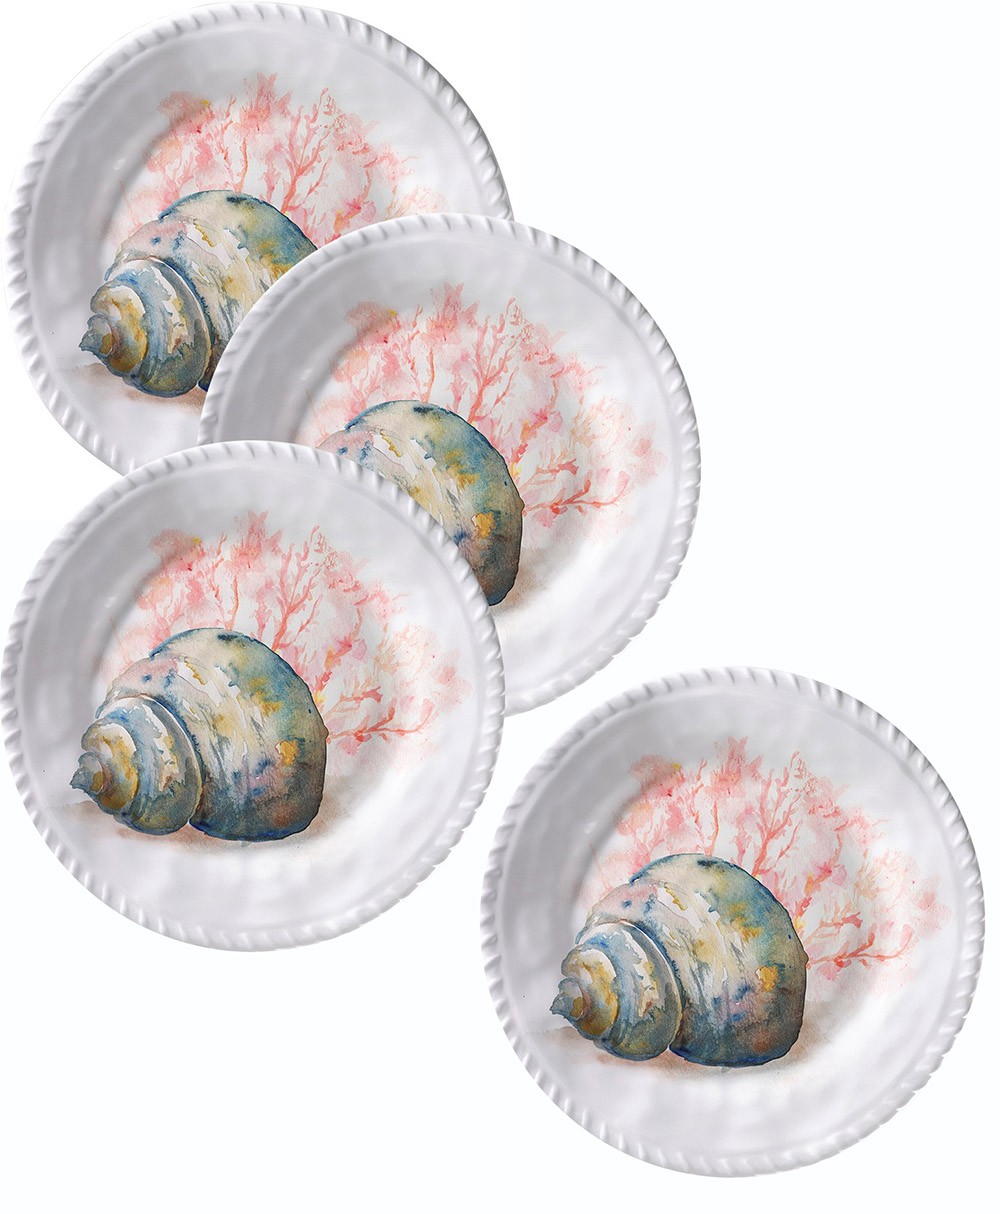 Merritt International Coral Shell 8in plate - Conch 4 pack